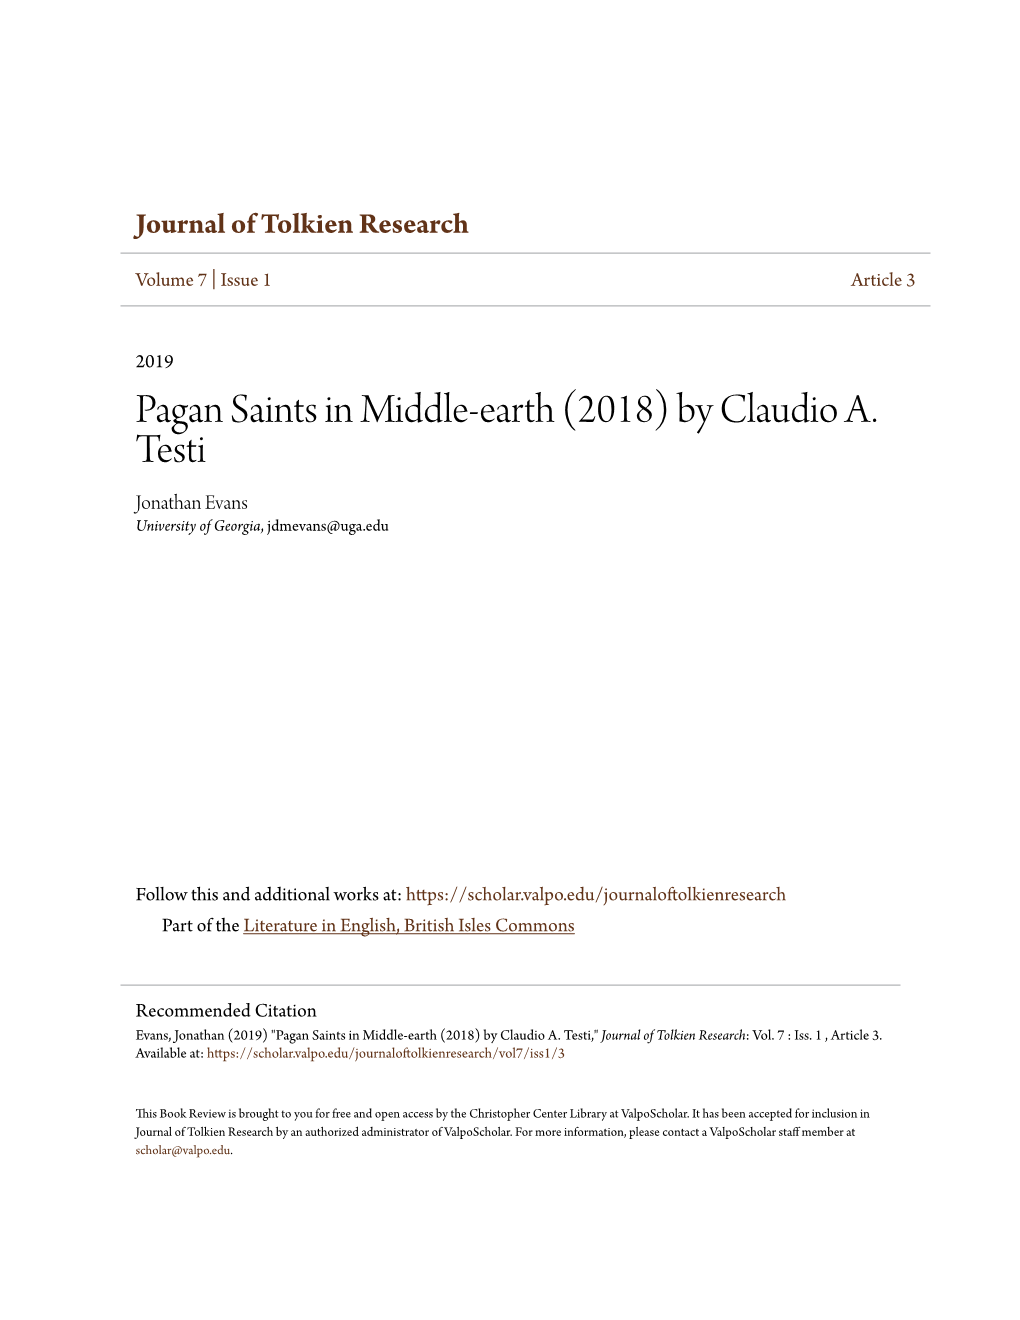 Pagan Saints in Middle-Earth (2018) by Claudio A. Testi Jonathan Evans University of Georgia, Jdmevans@Uga.Edu